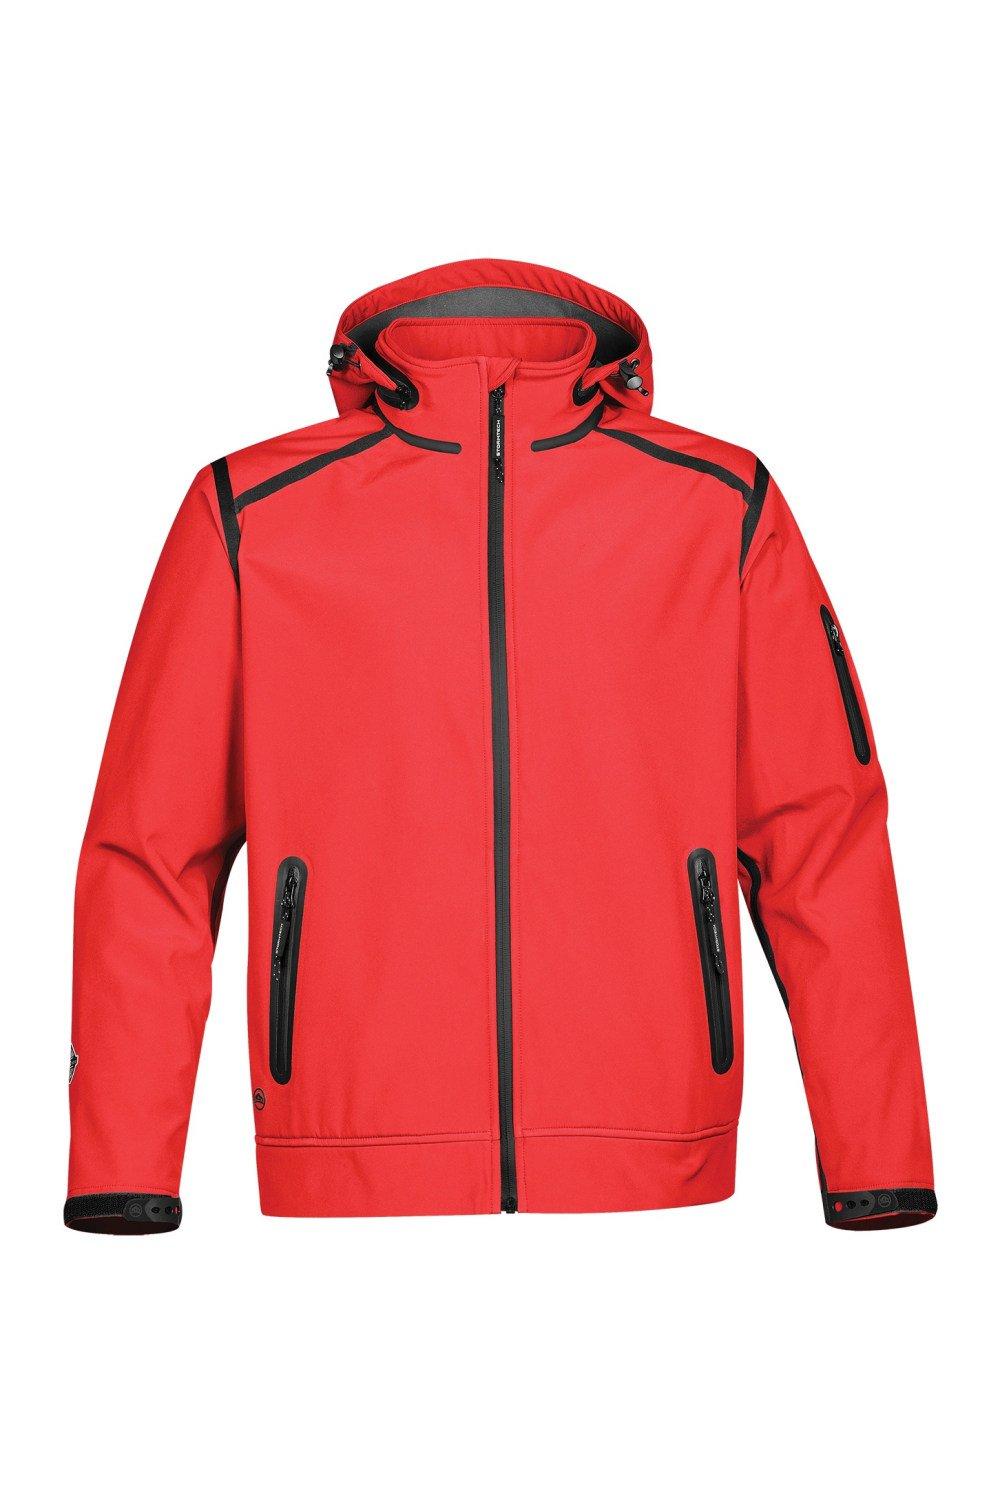 Куртка Oasis Softshell Stormtech, красный куртка oasis softshell stormtech красный